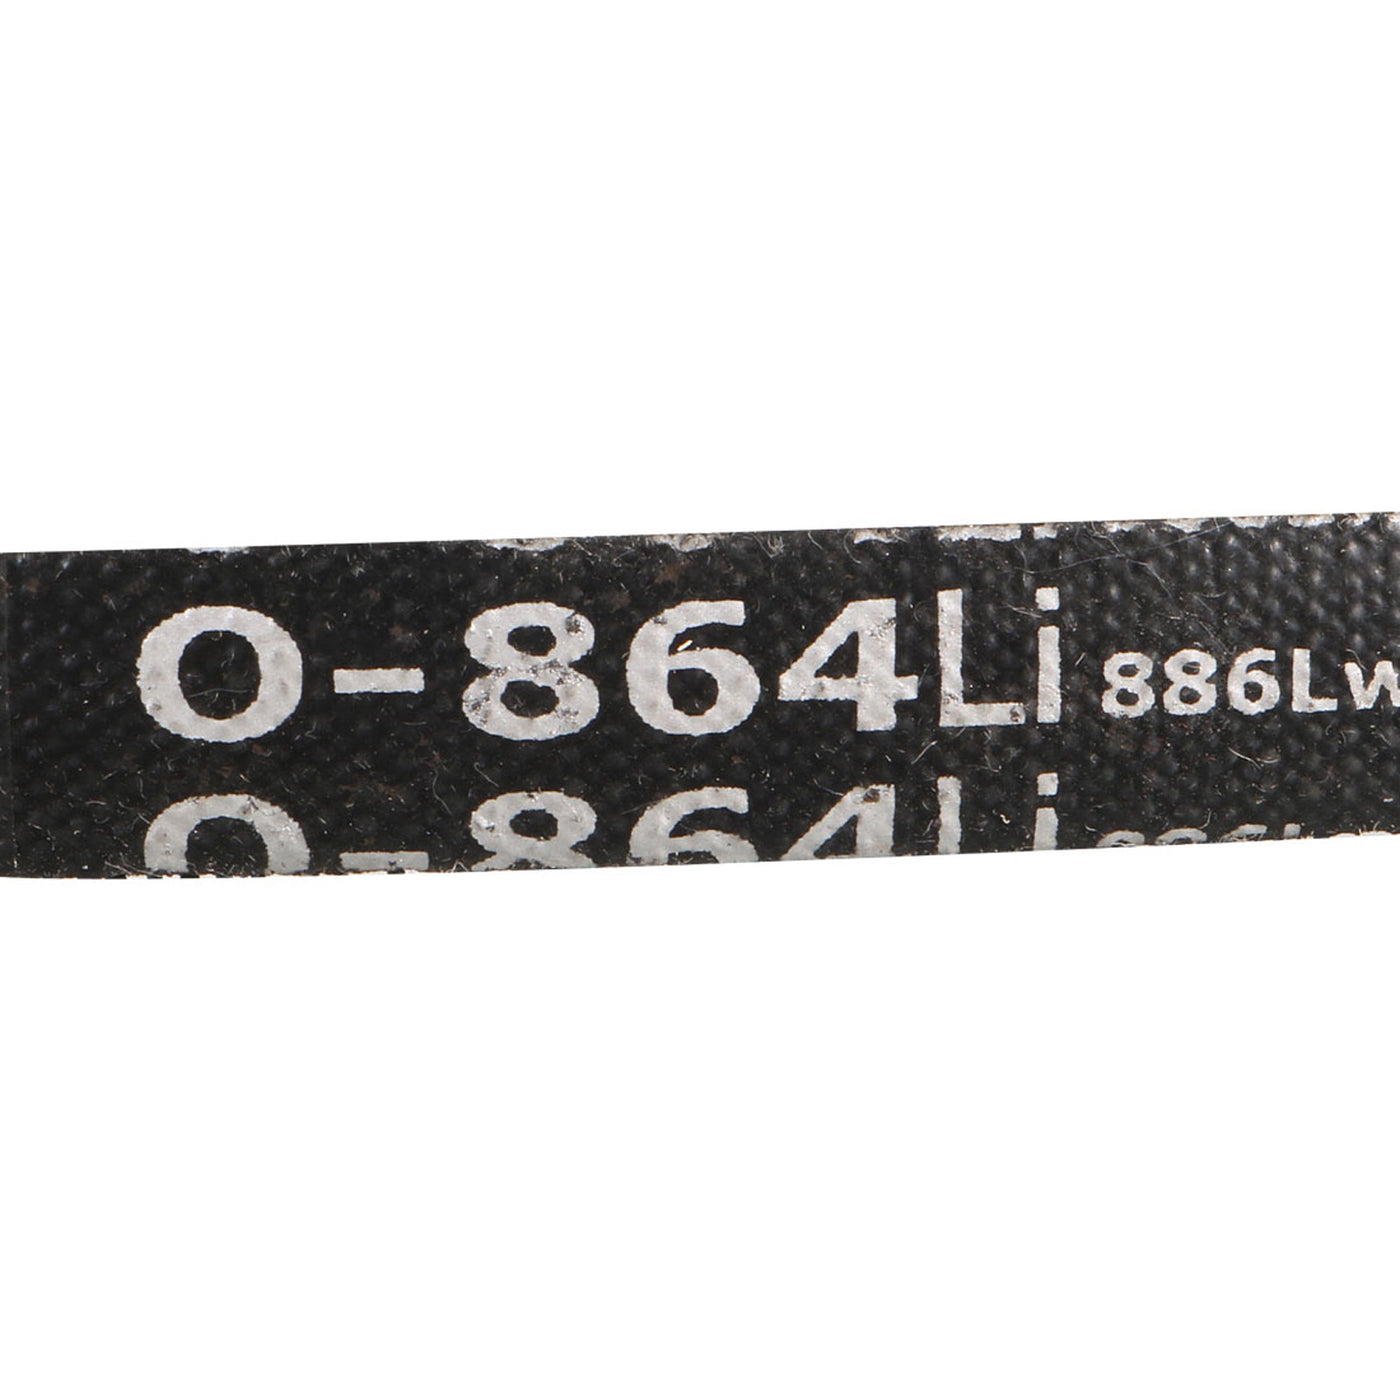 uxcell Uxcell O-864 V-Belts 864mm Inner Girth Rubber Machine Transmission Drive Belt